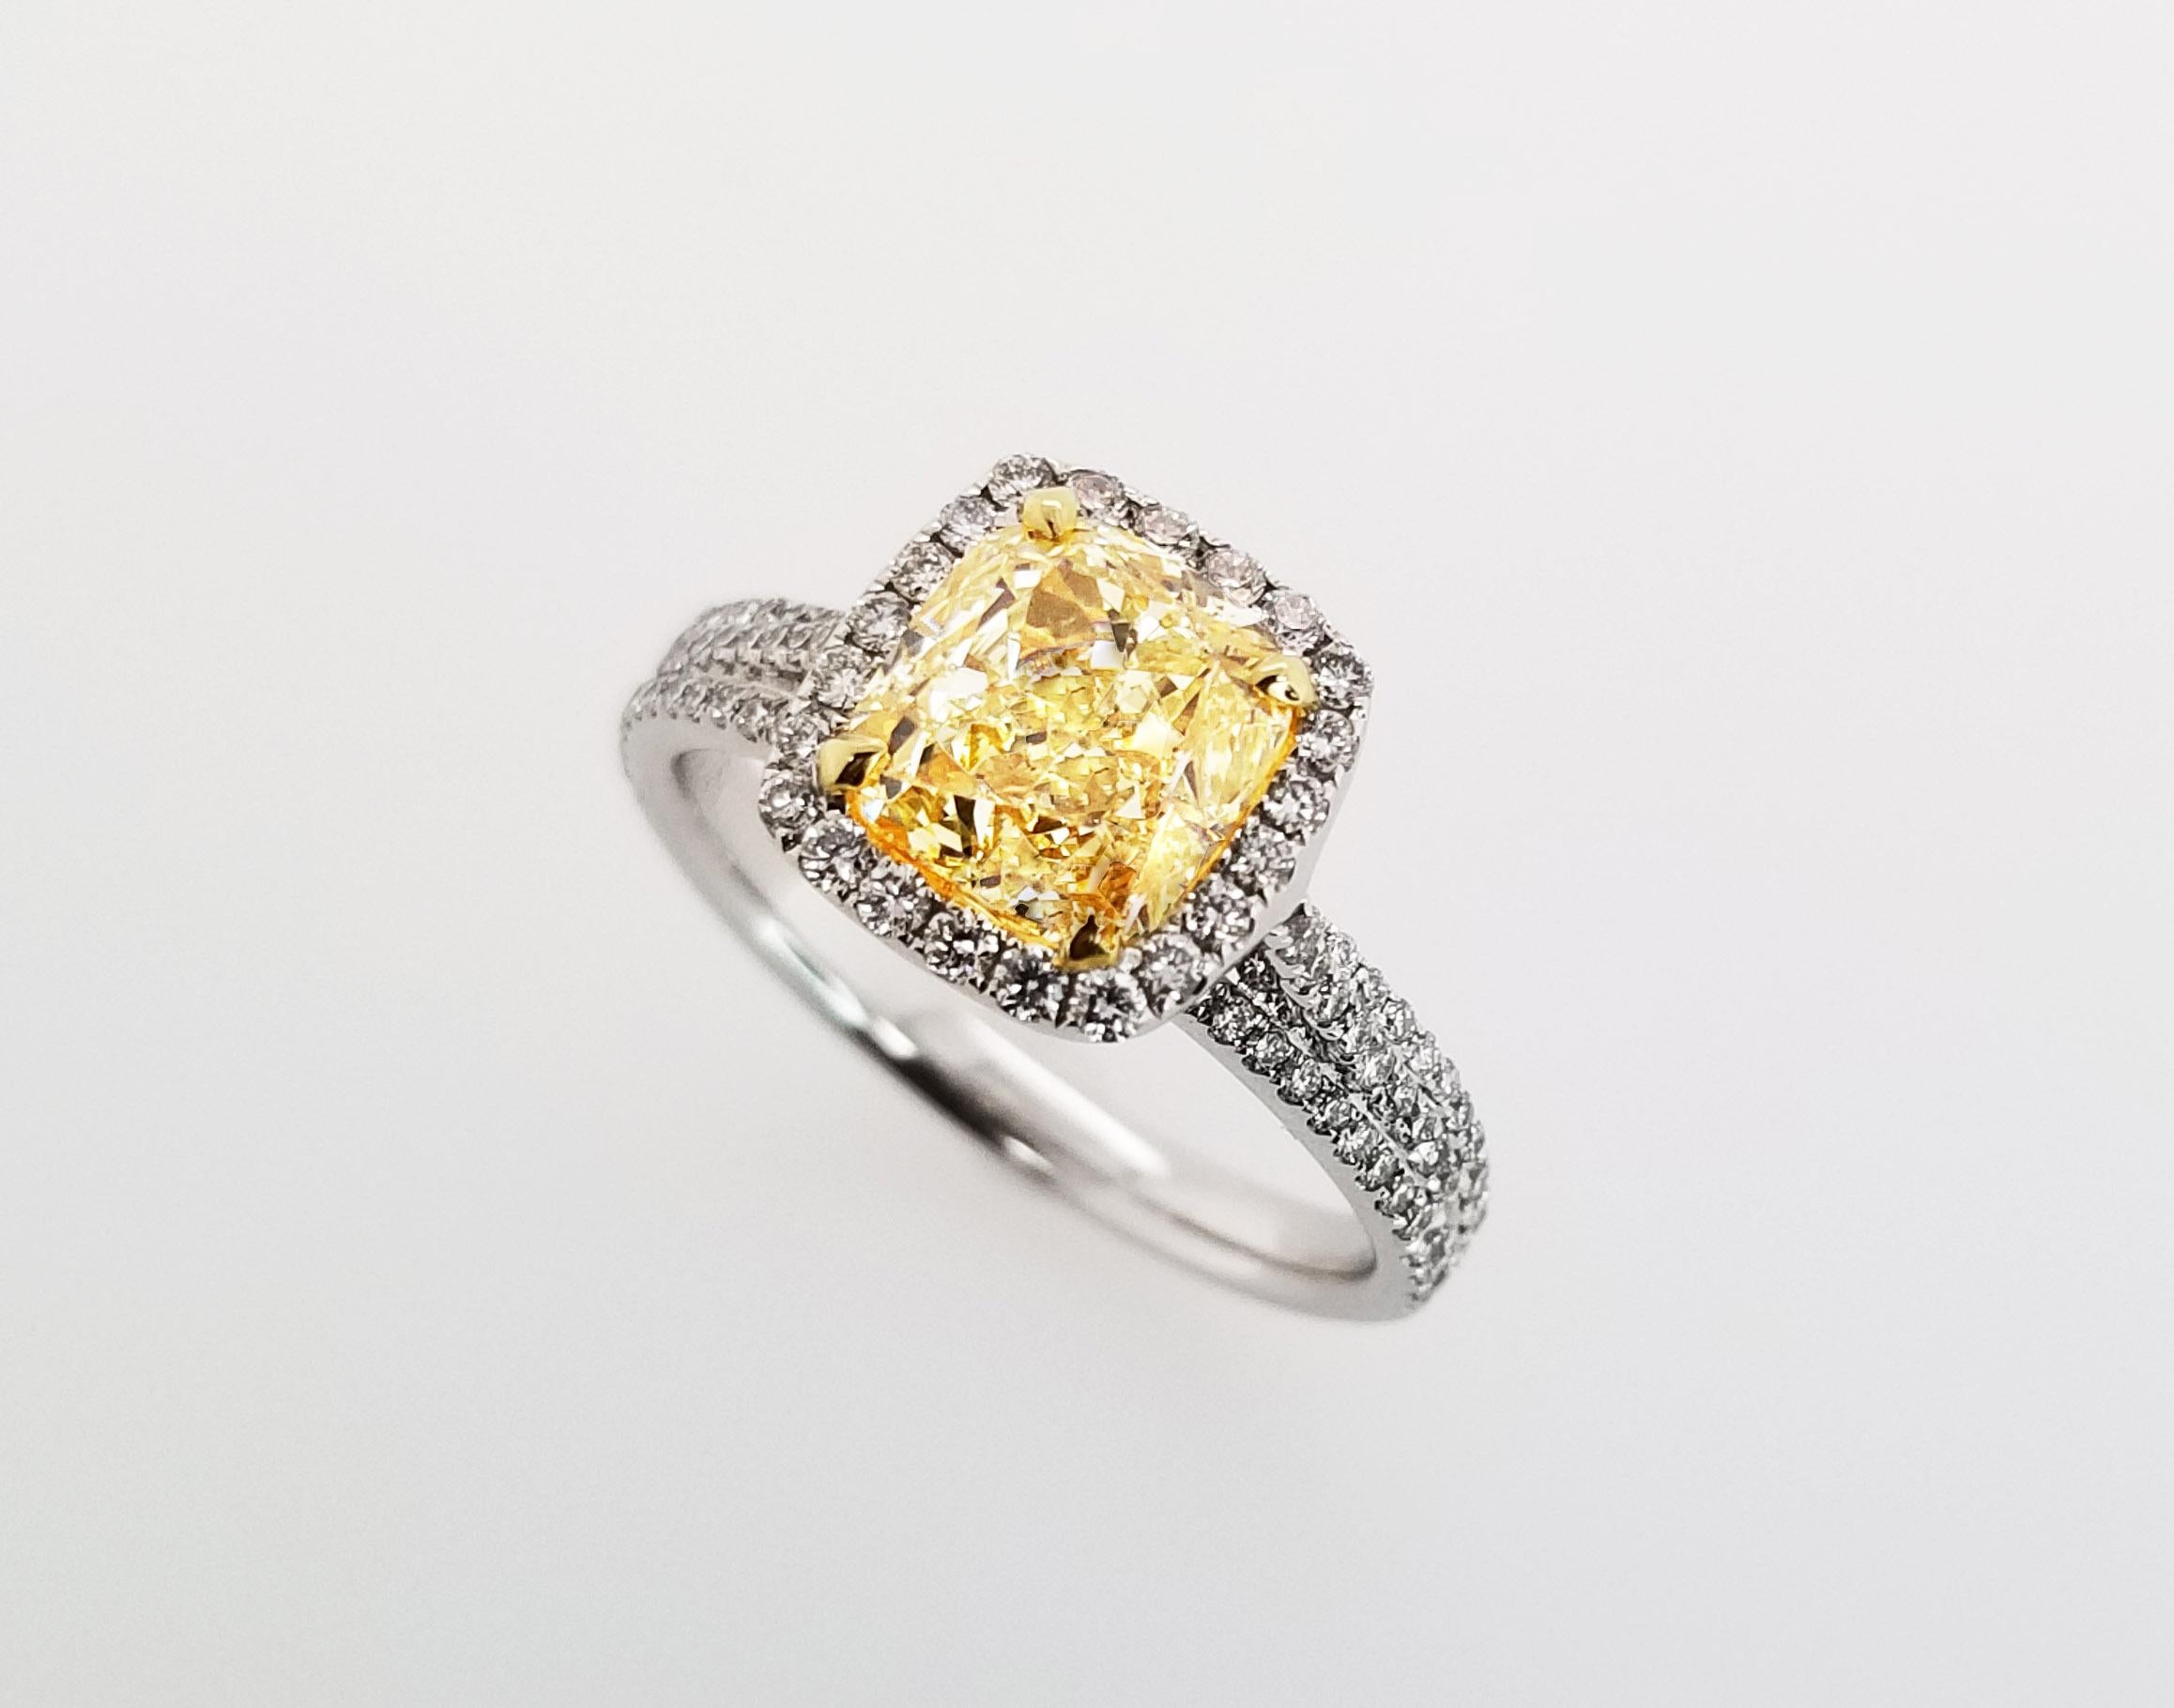 Scarselli GIA 2 Cushion Cut Fancy Yellow Diamond Engagement Ring in 18 Karat 1